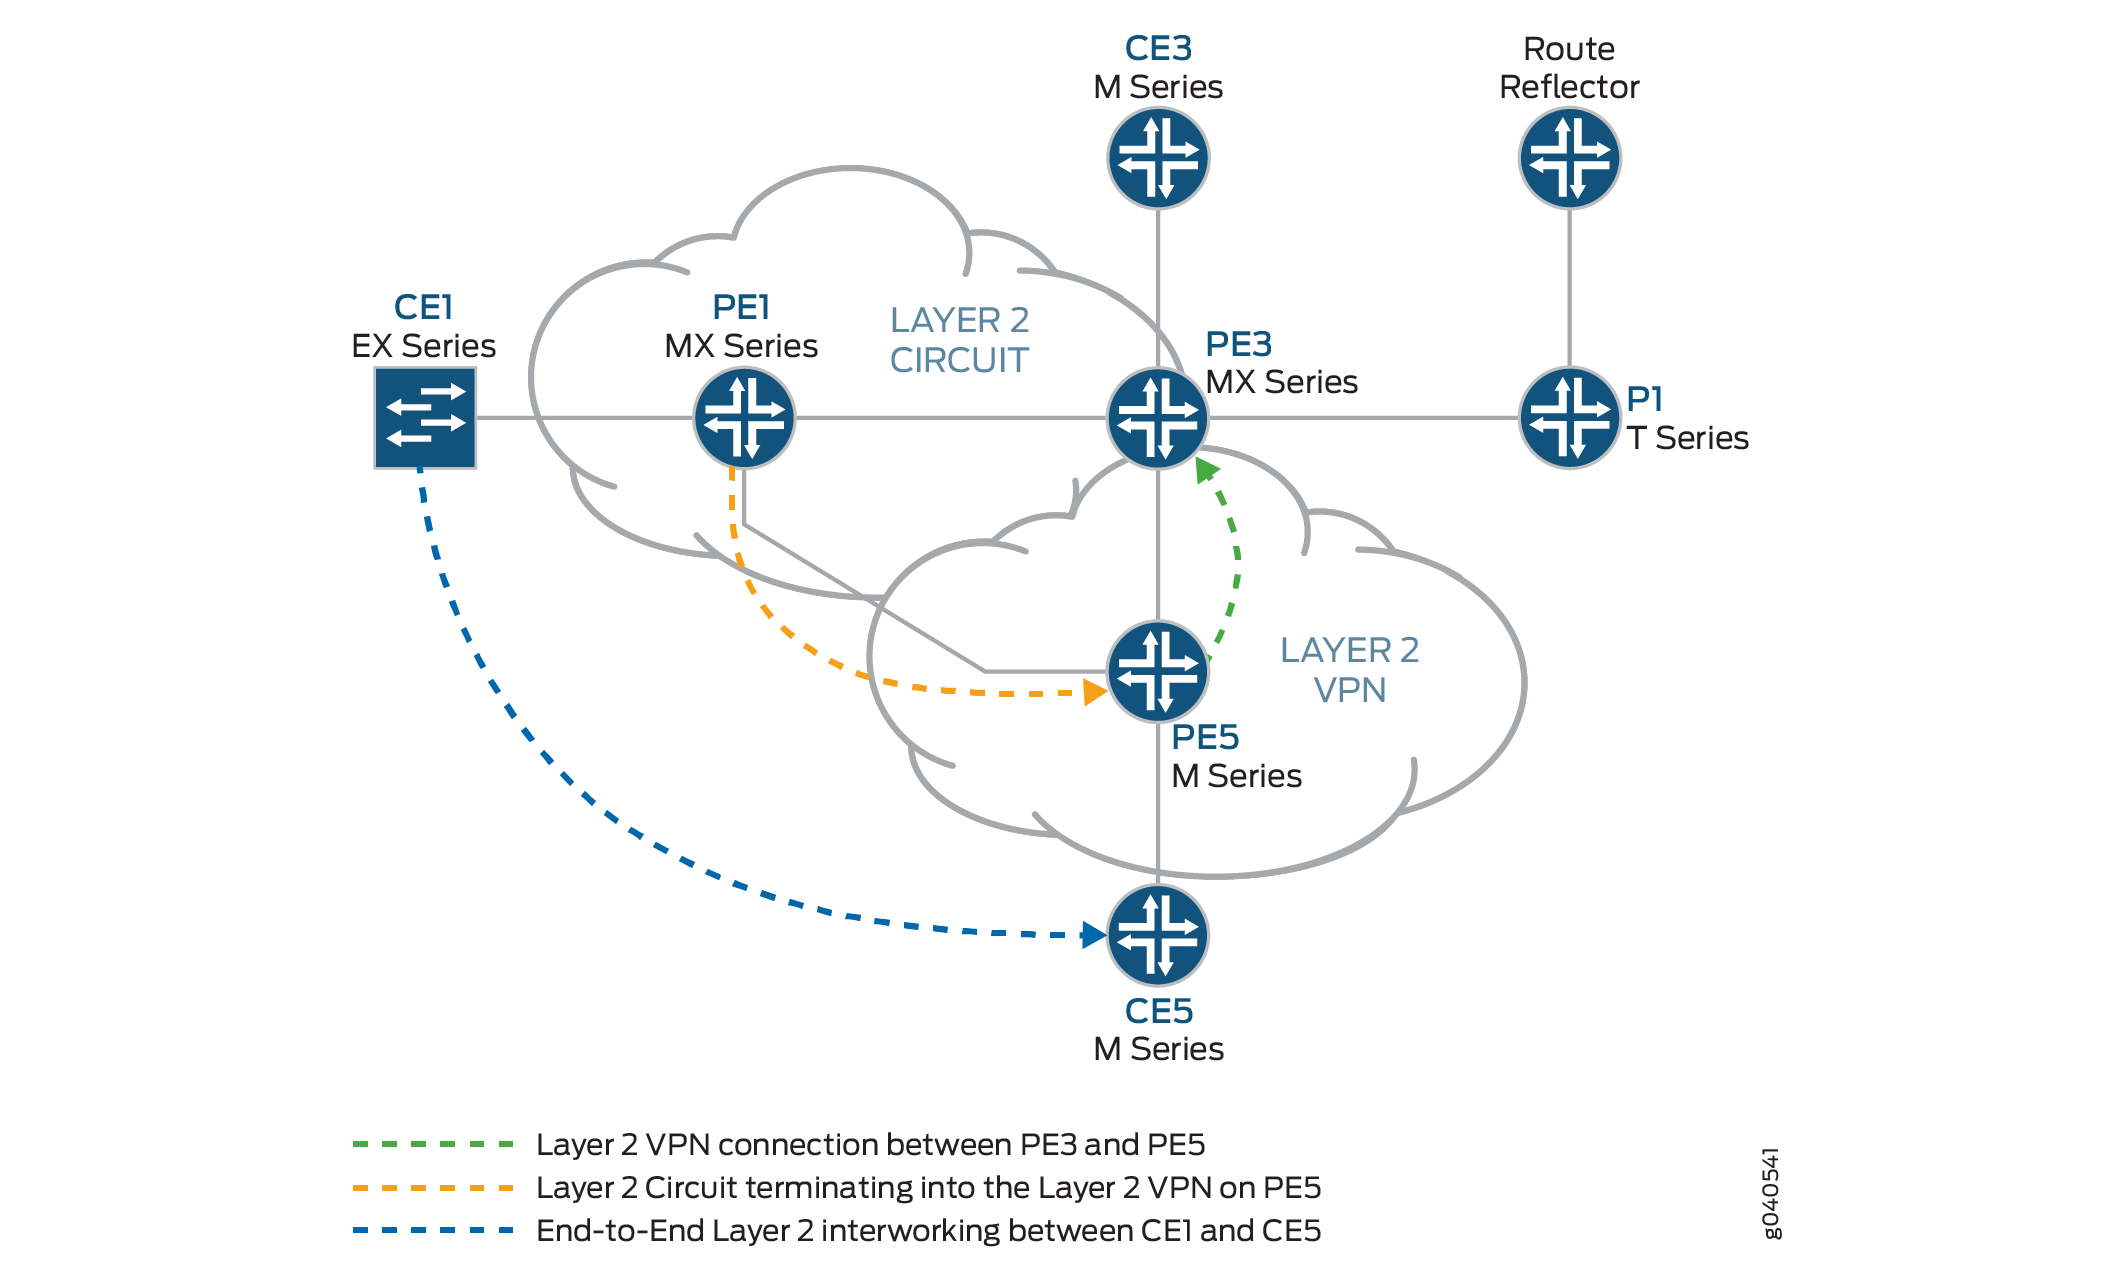 parallels bridged network vpn diagram